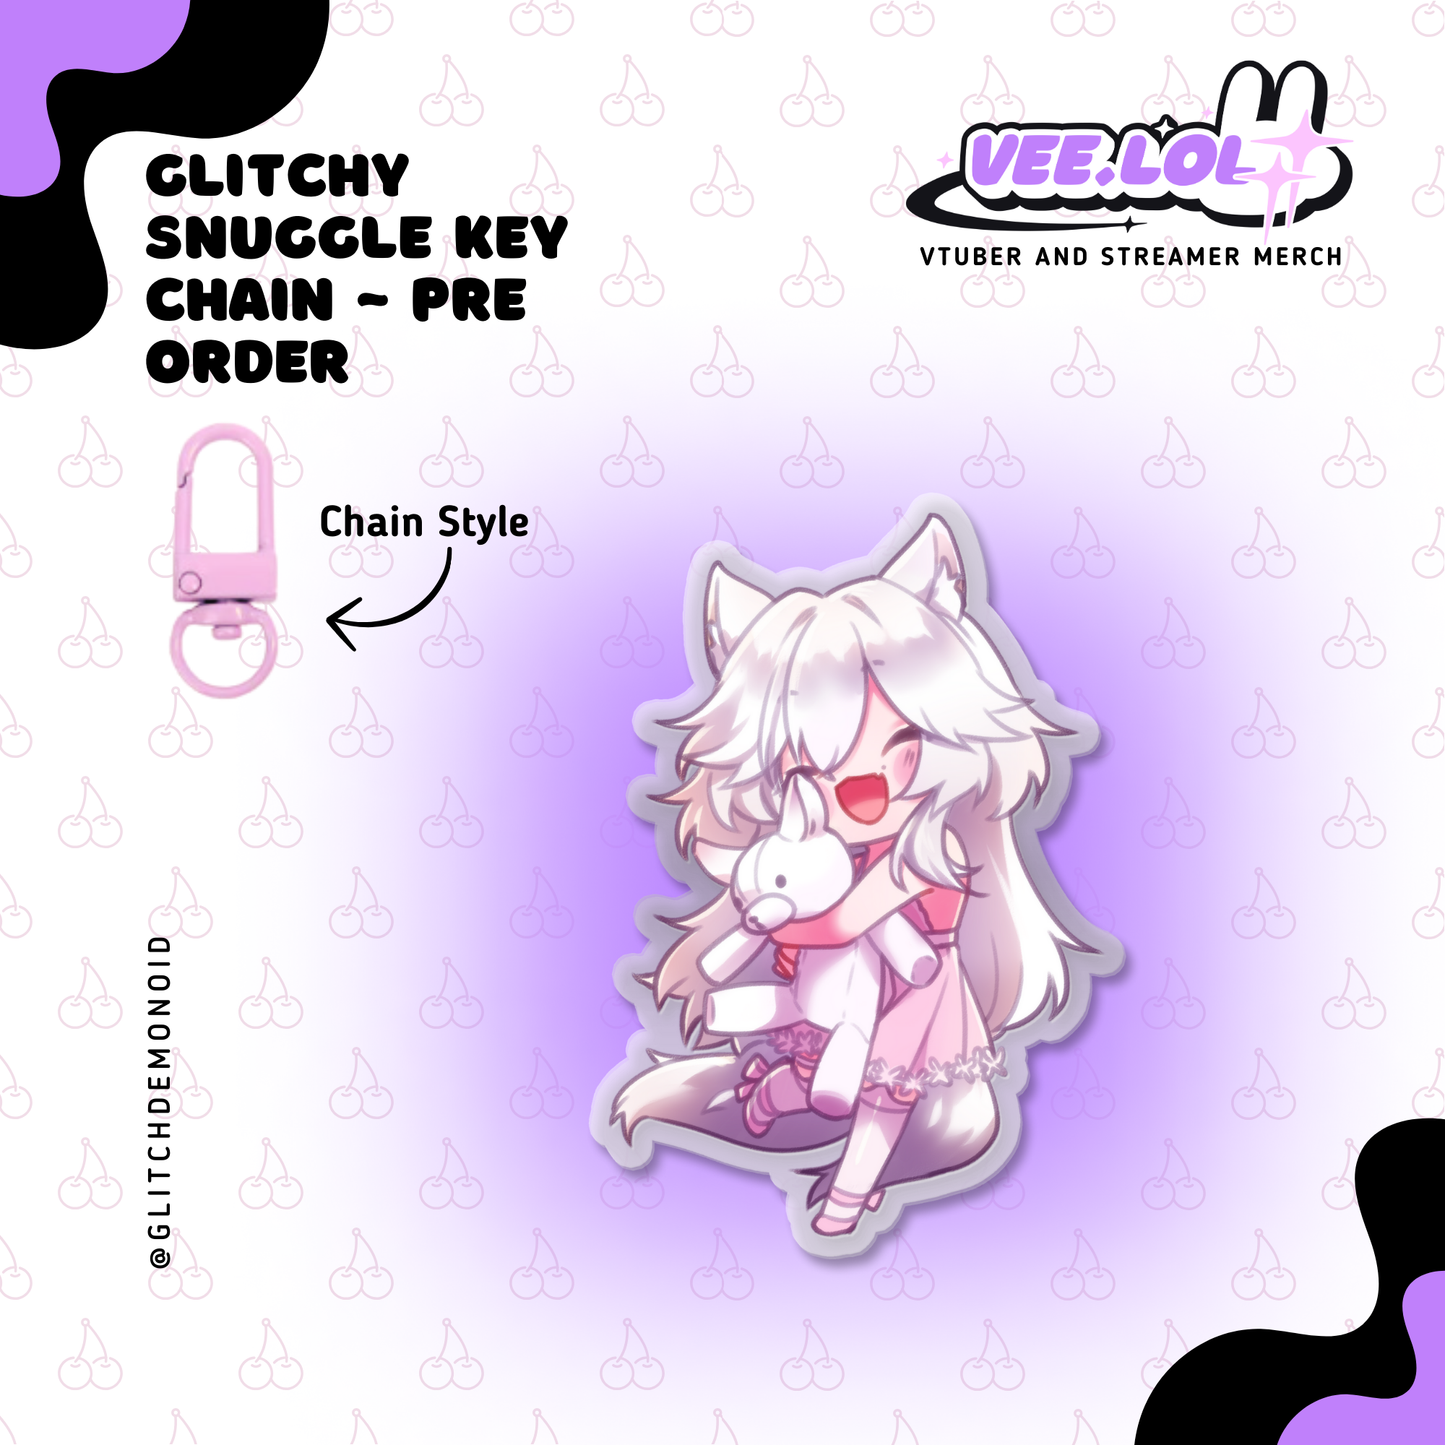 Glitchy Snuggle Key Chain ~ Pre Order